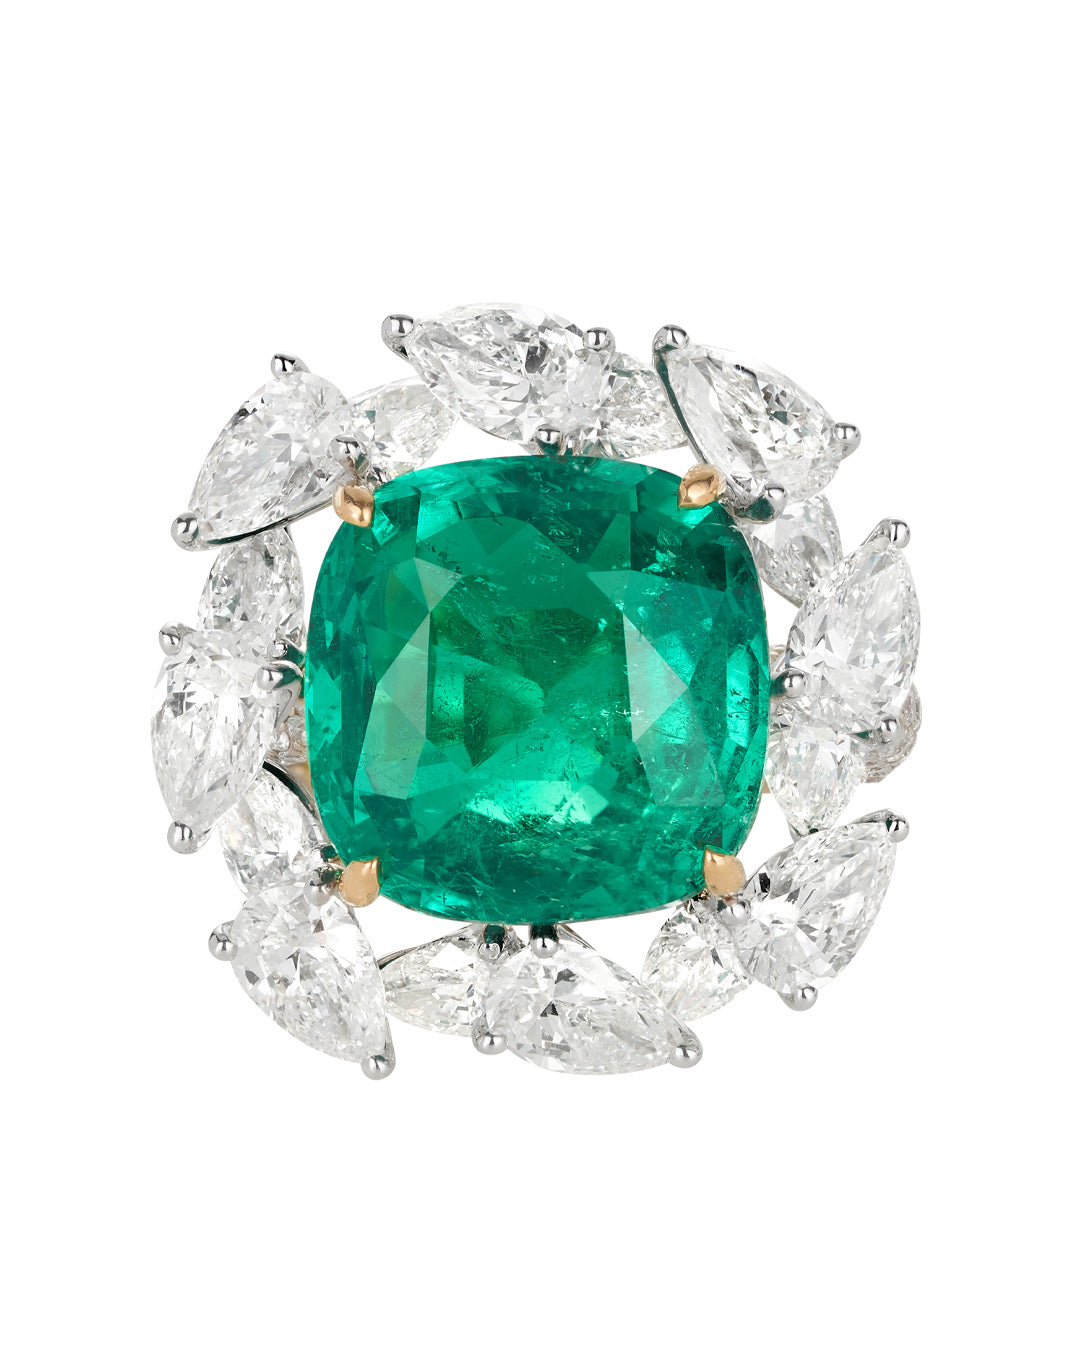 11.15ct Emerald and Diamond Ring